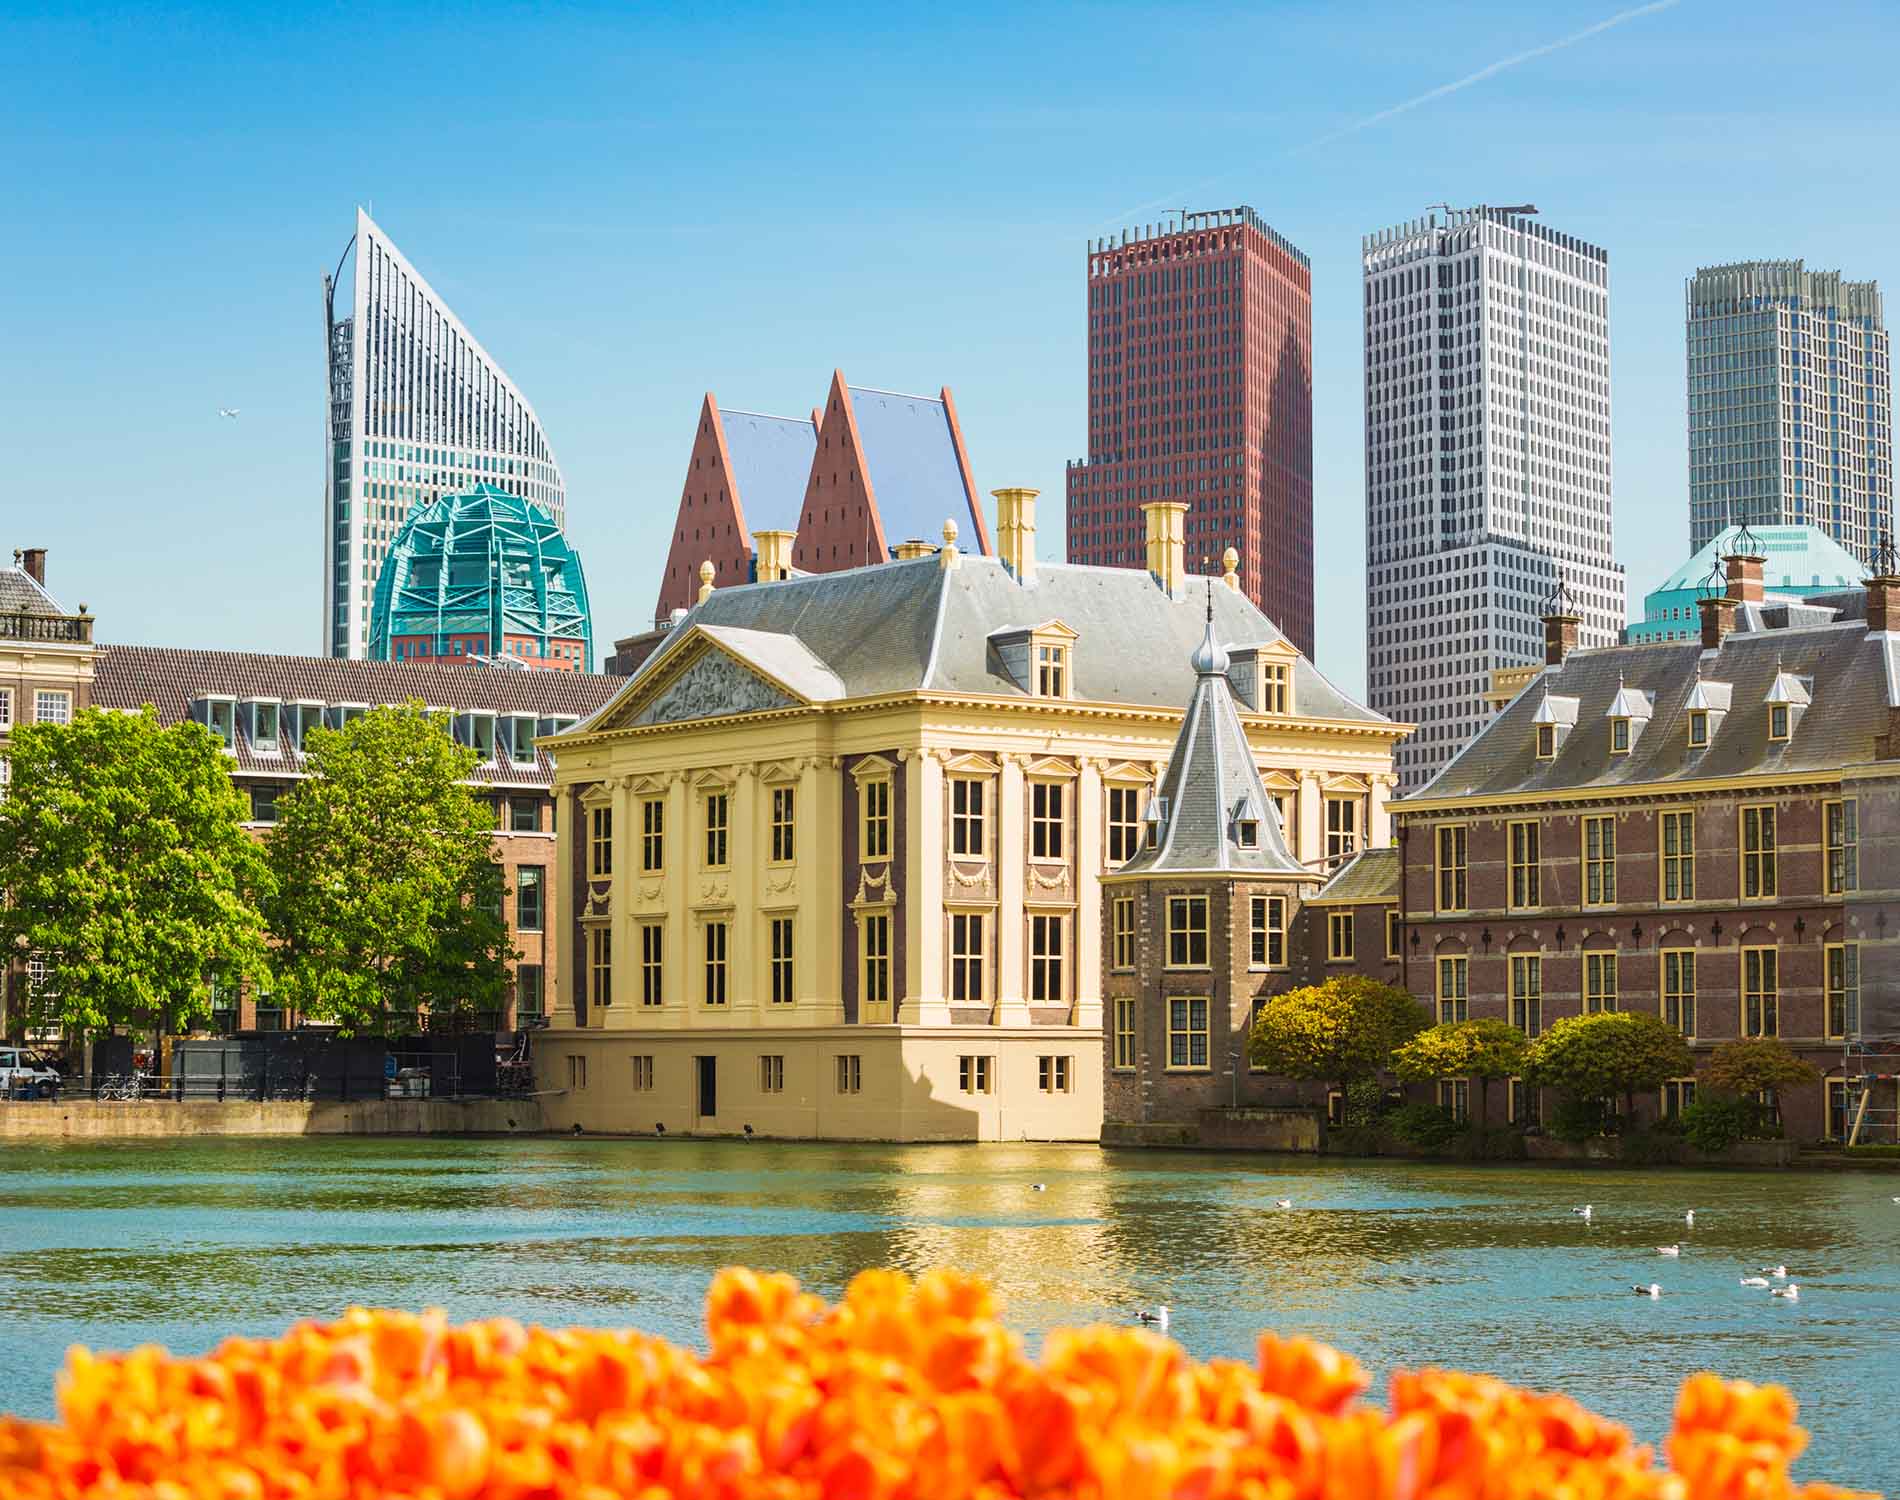 The Hague, Netherlands 